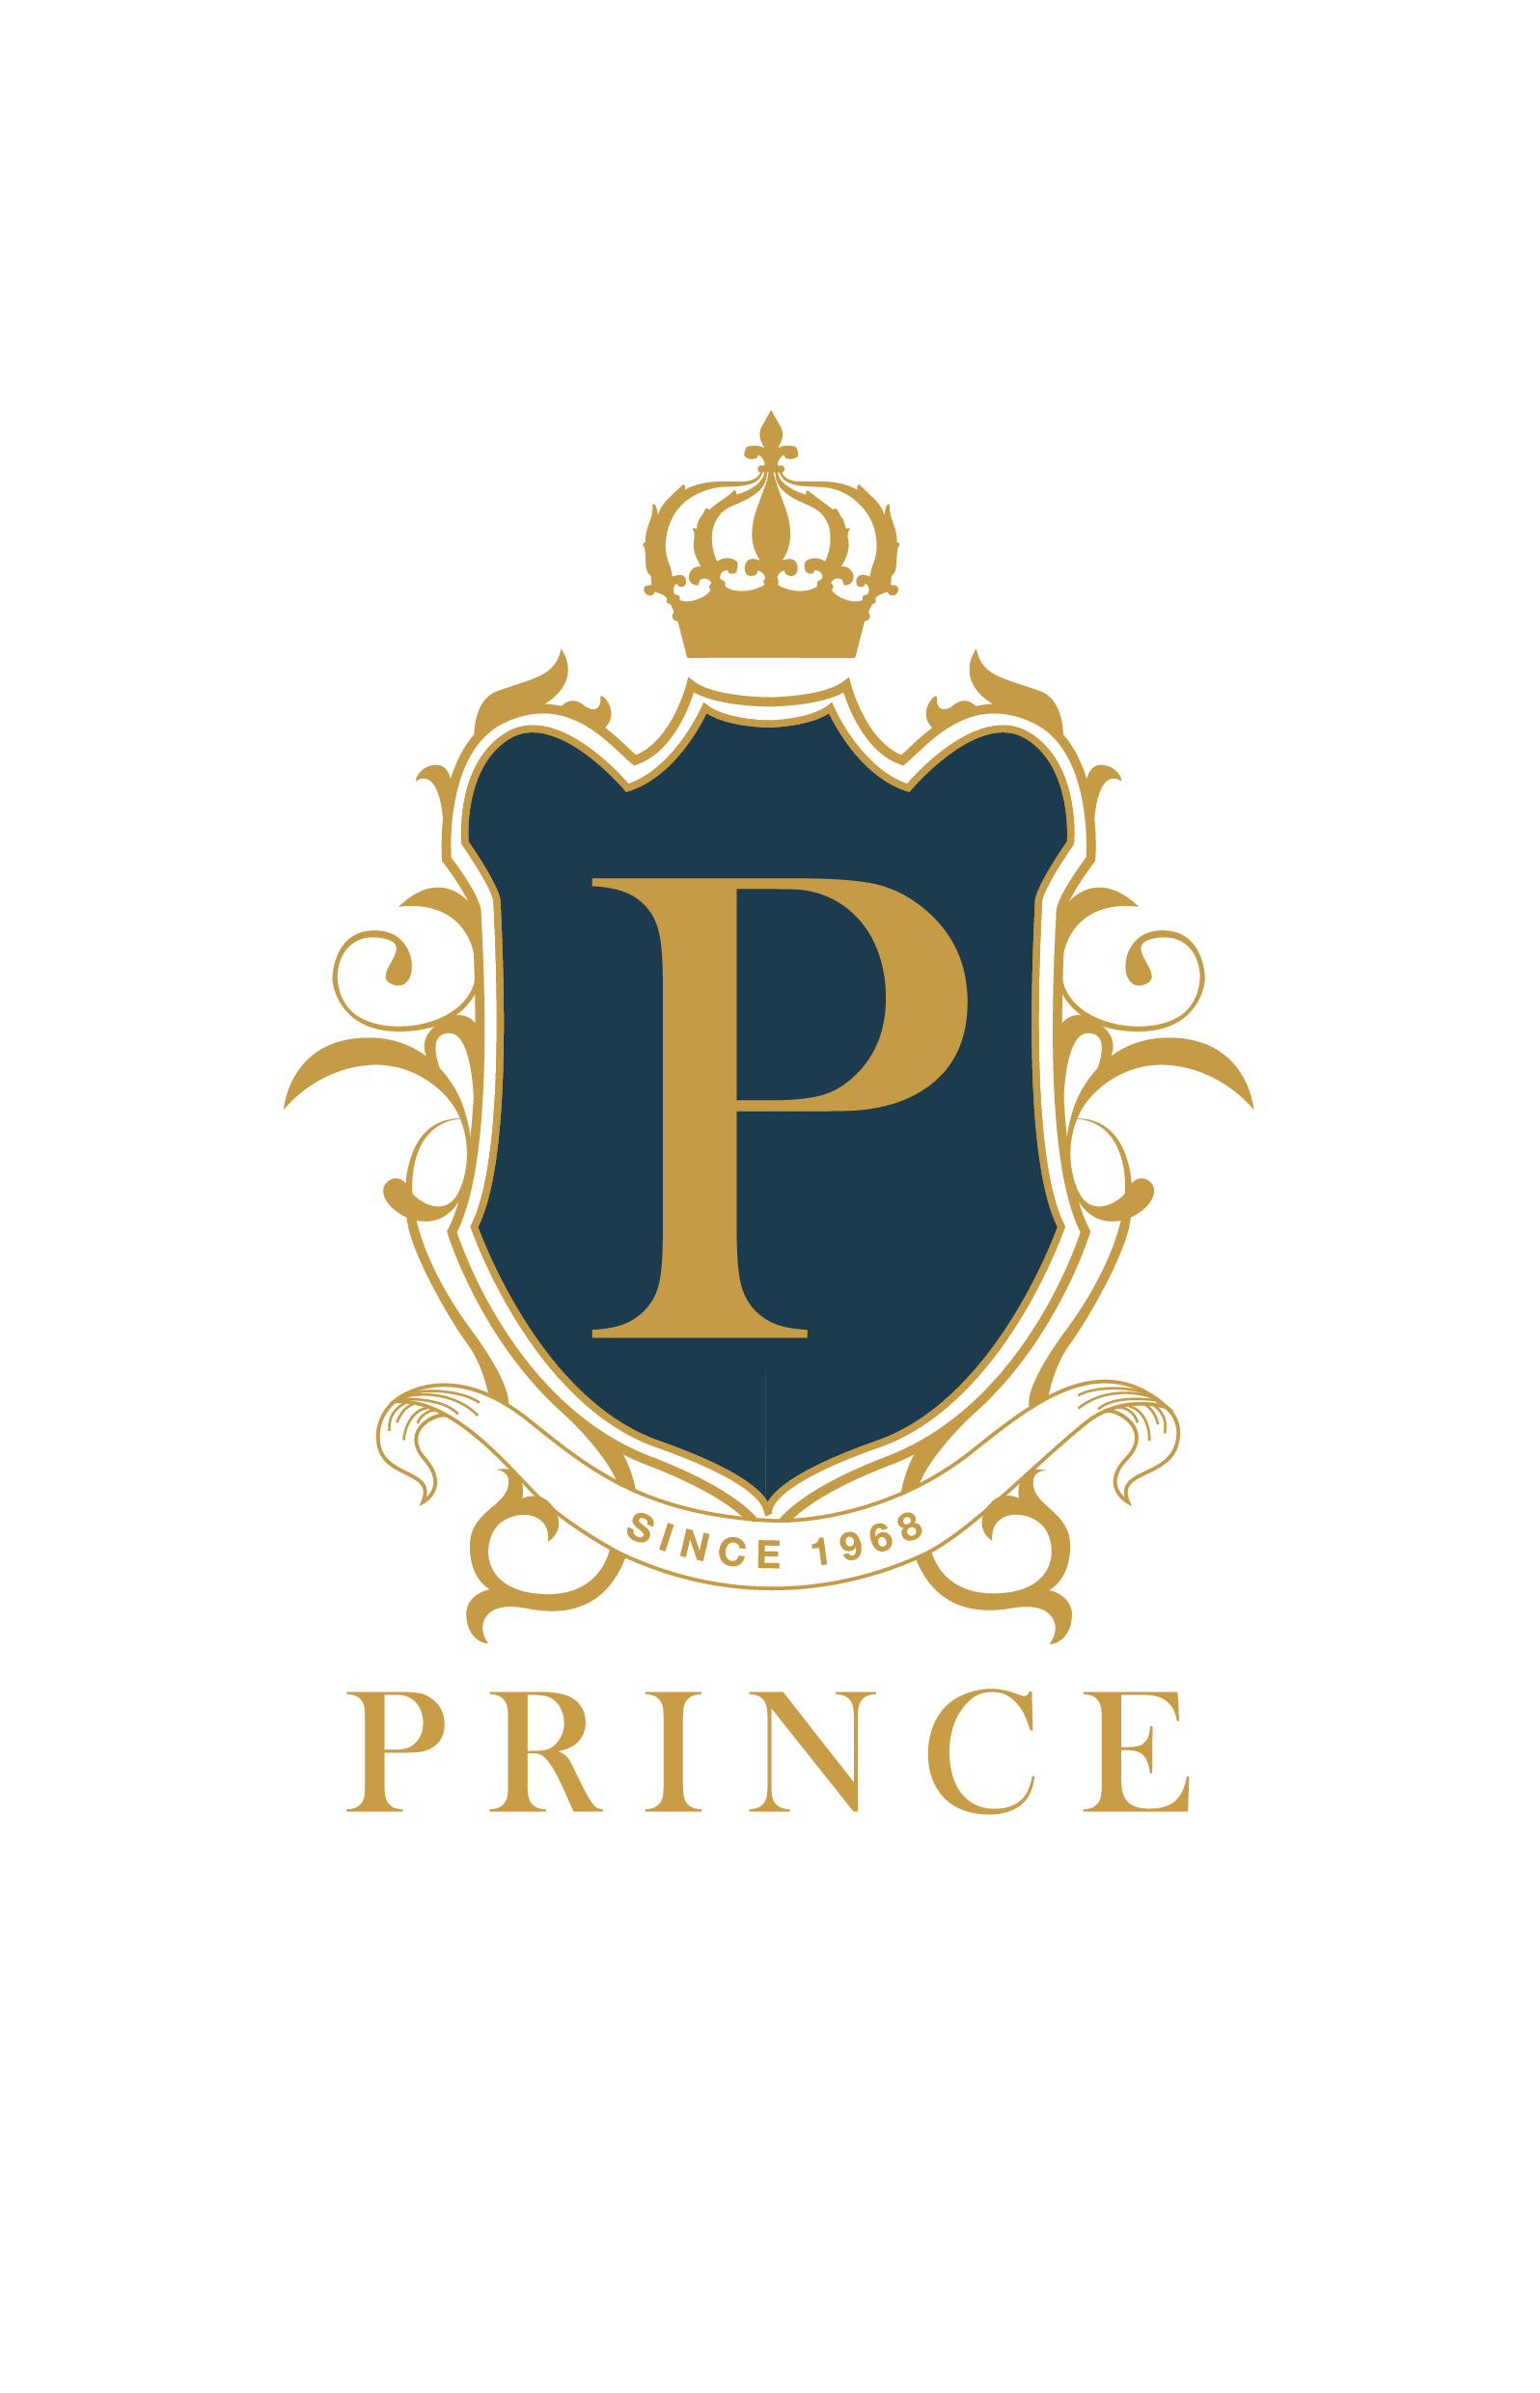 Prince Logo - File:Prince logo .png - Wikimedia Commons